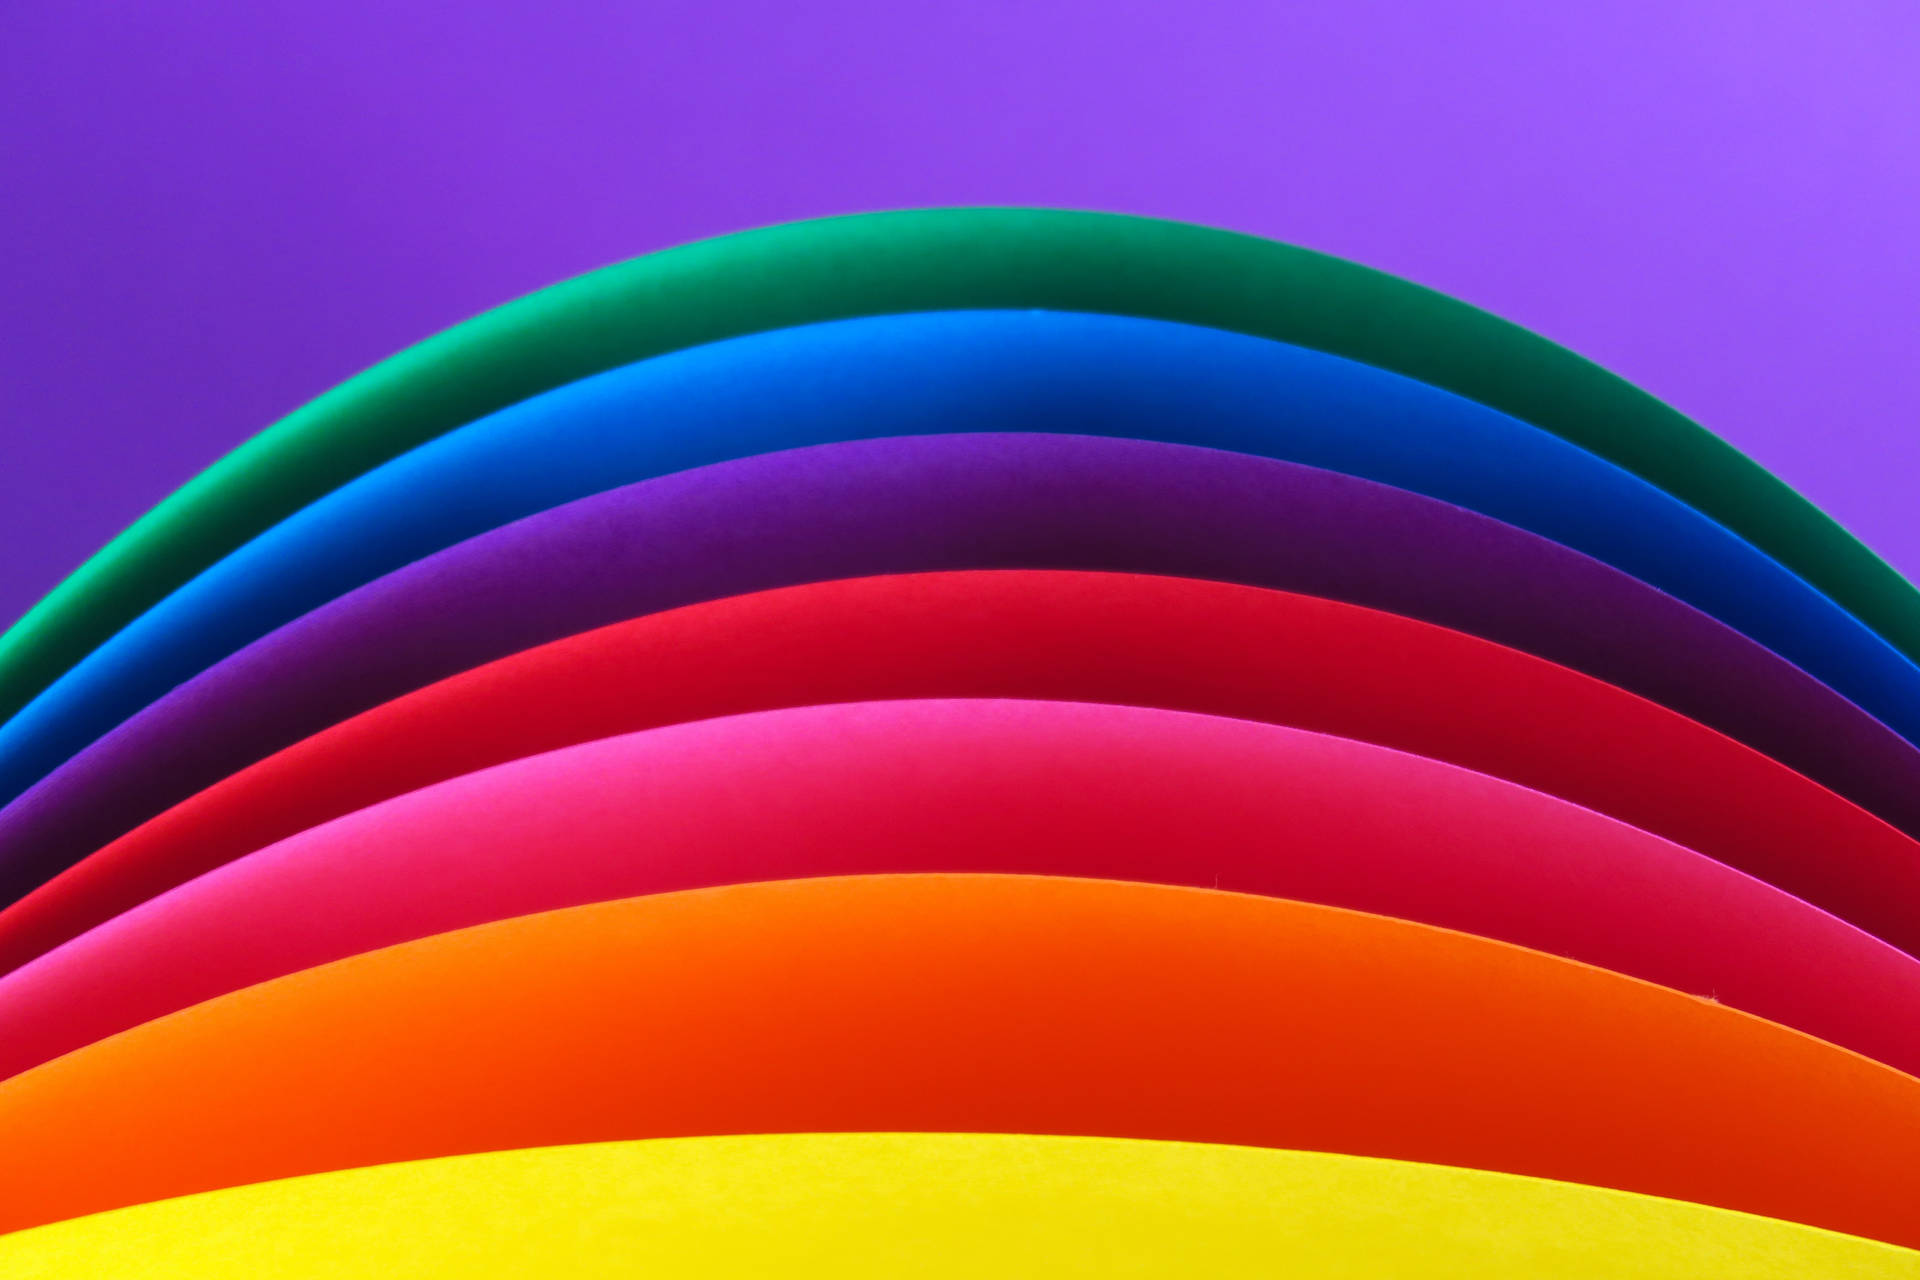 Free Rainbow Aesthetic Wallpaper Downloads, [400+] Rainbow Aesthetic  Wallpapers for FREE 